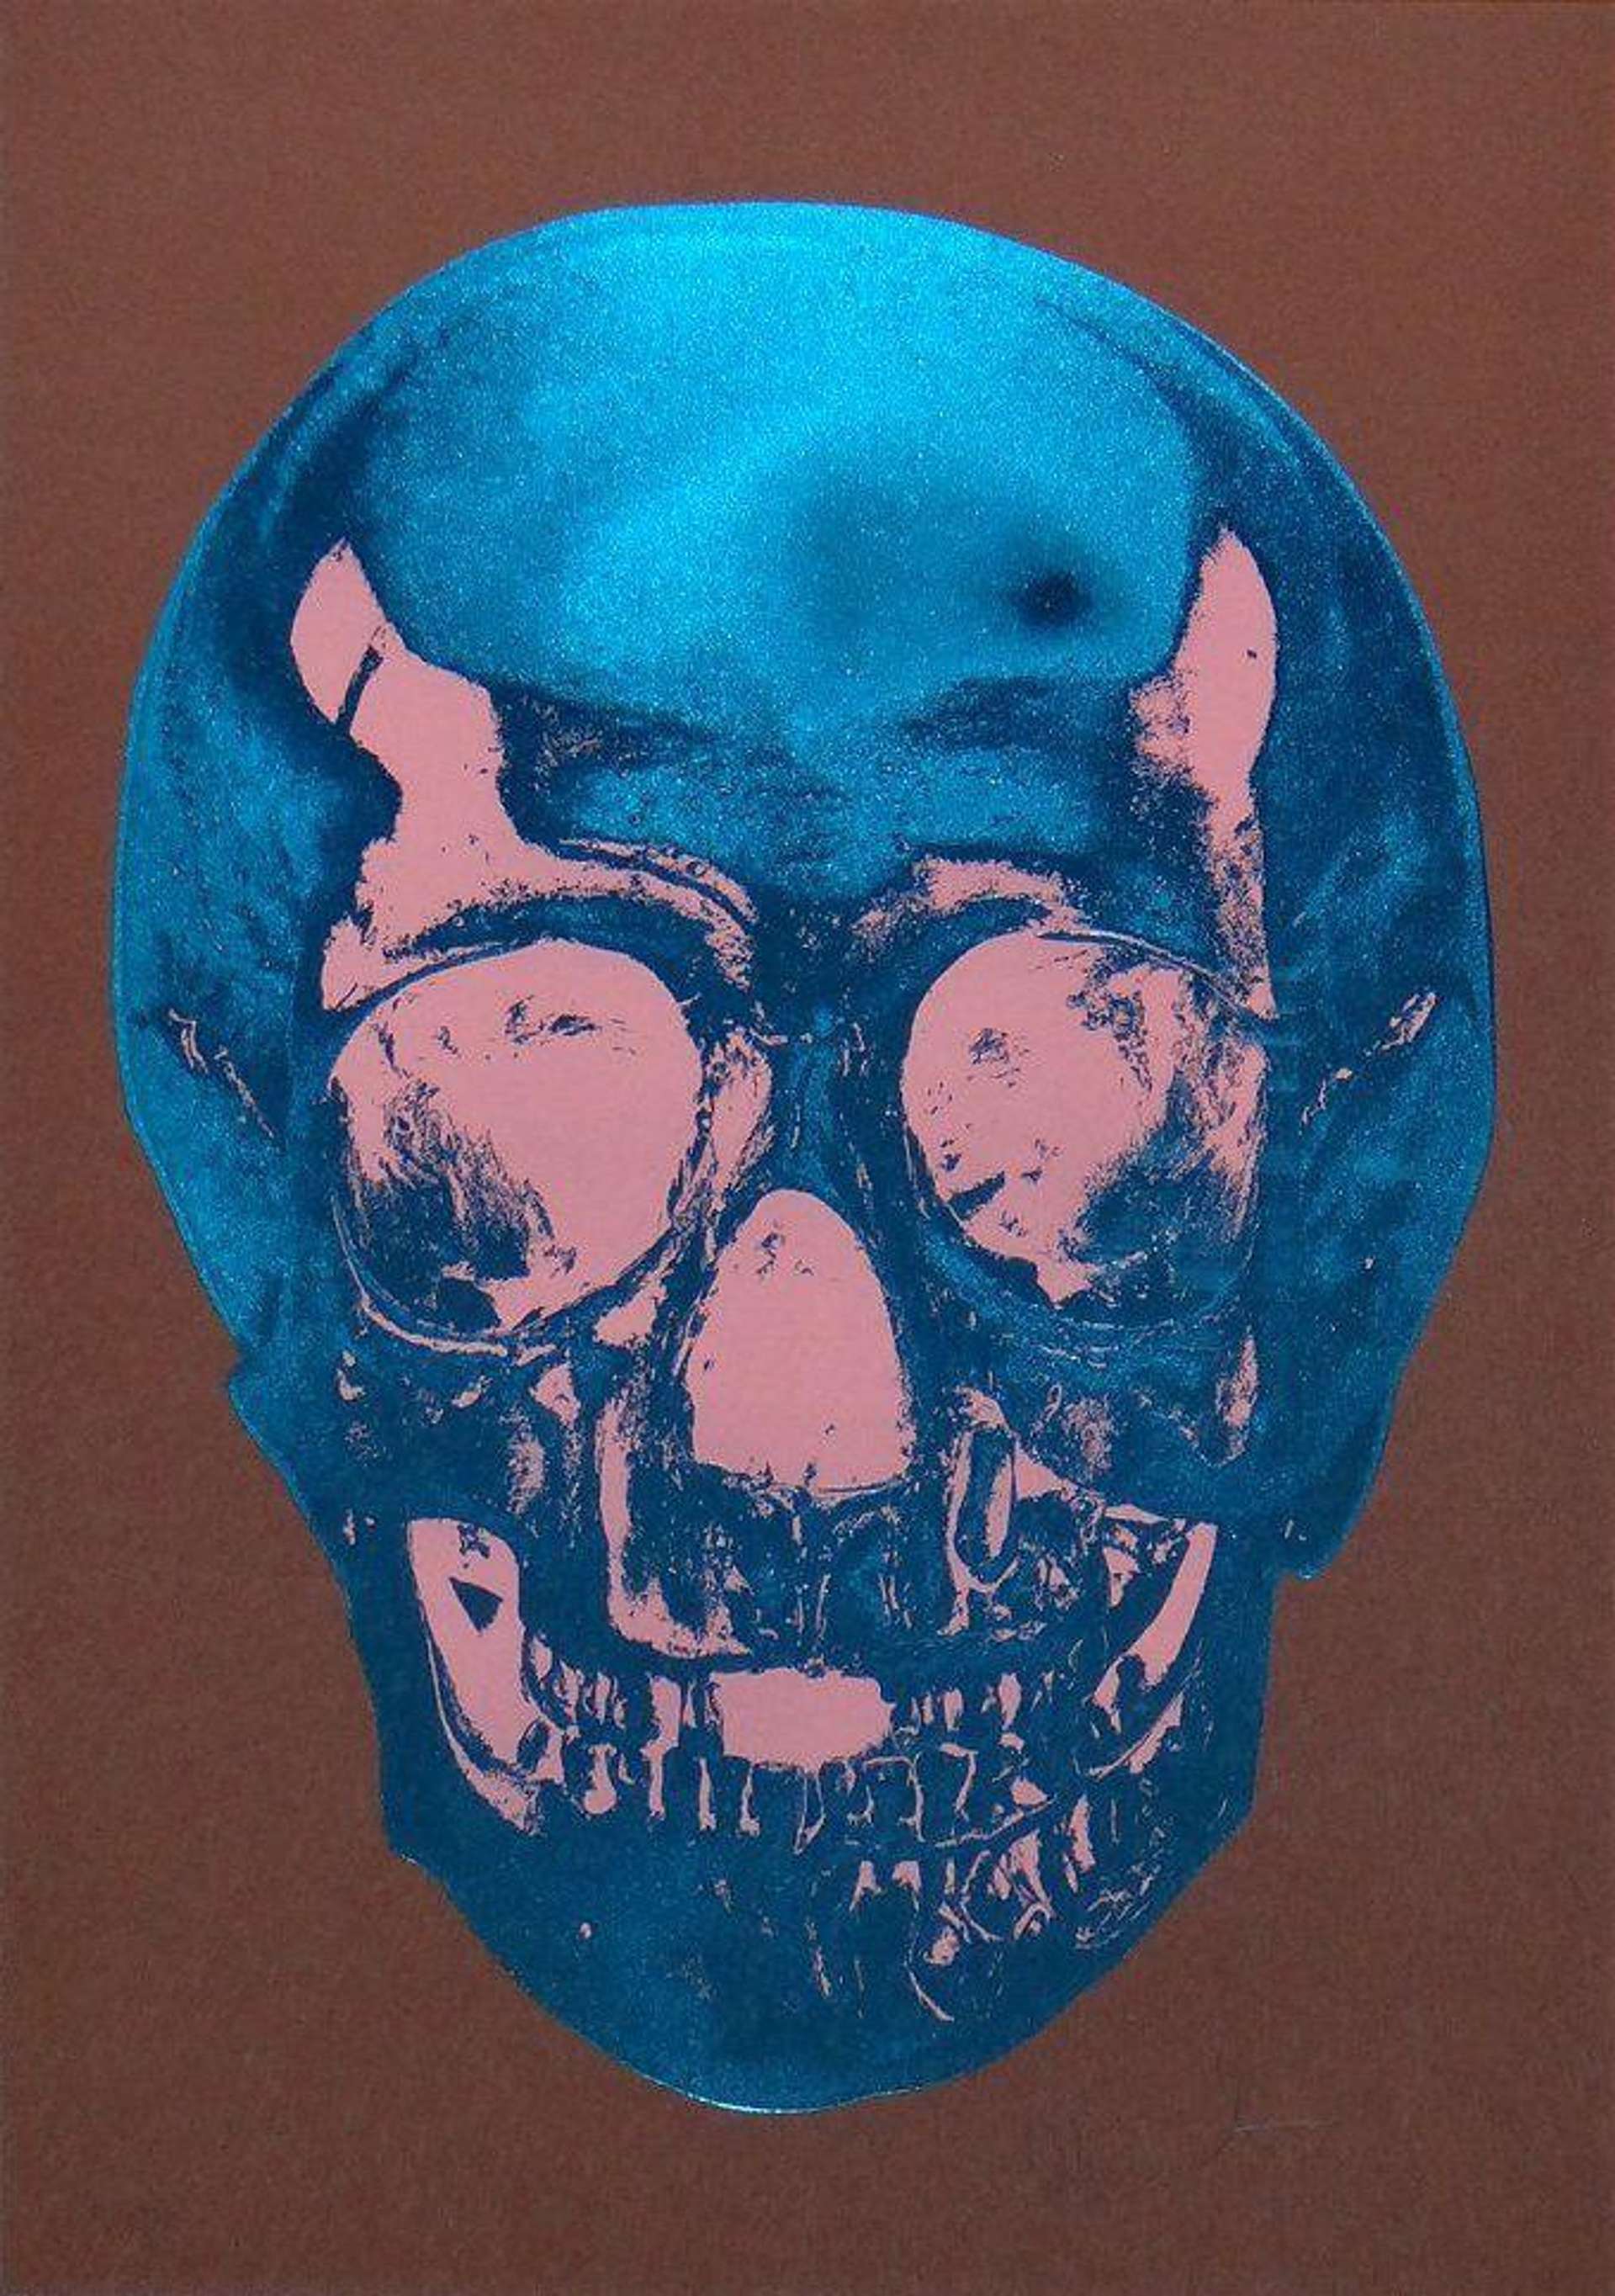 Damien Hirst: Till Death Do Us Part (milk chocolate brown, true blue, bubblegum pink) - Signed Print